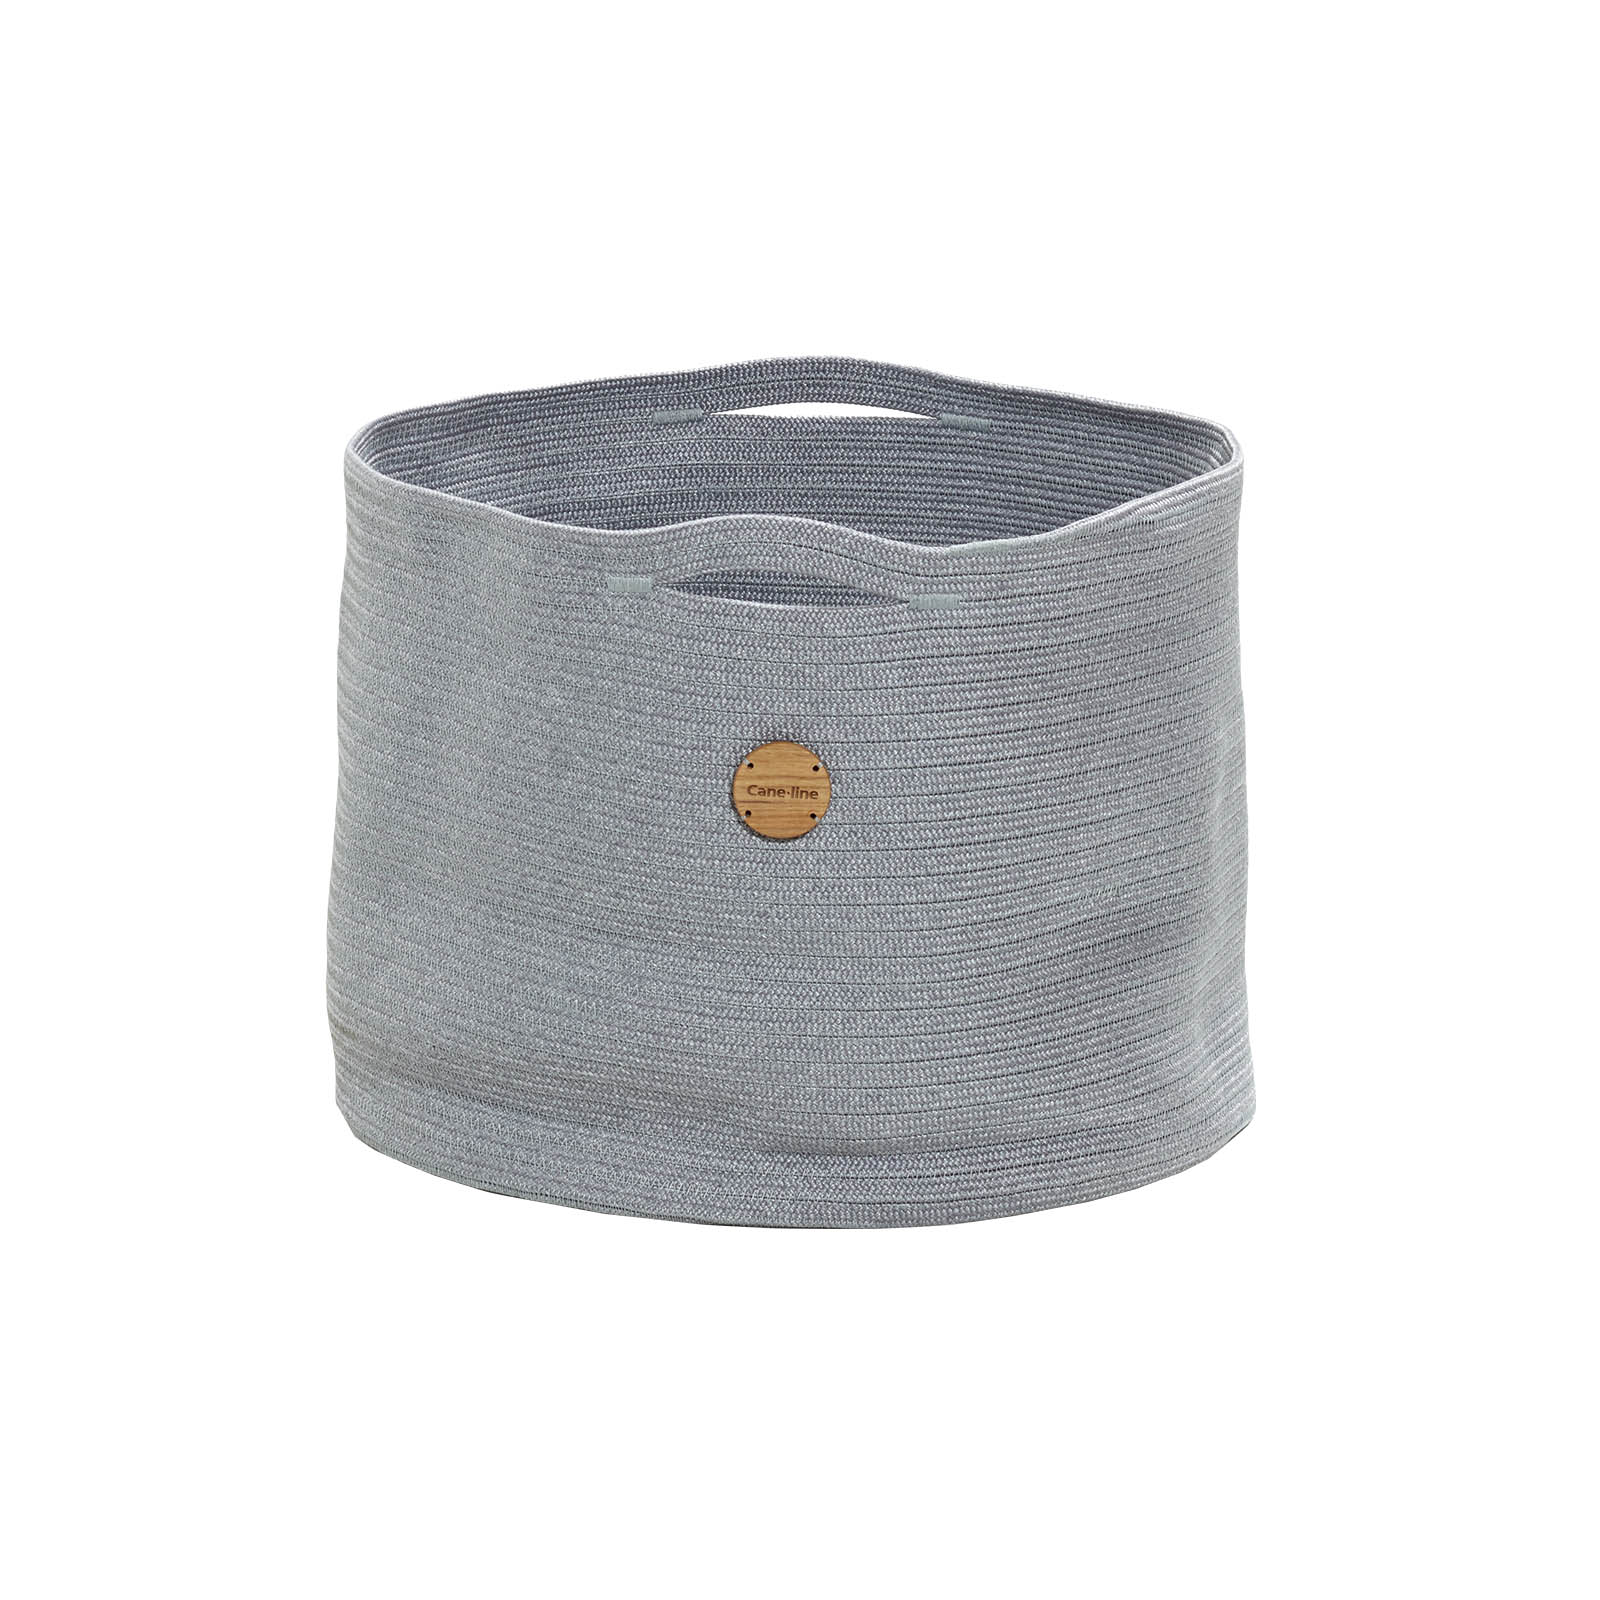 Soft Rope Korb groß Durchmesser 50 cm aus Cane-line Soft Rope in Light Grey